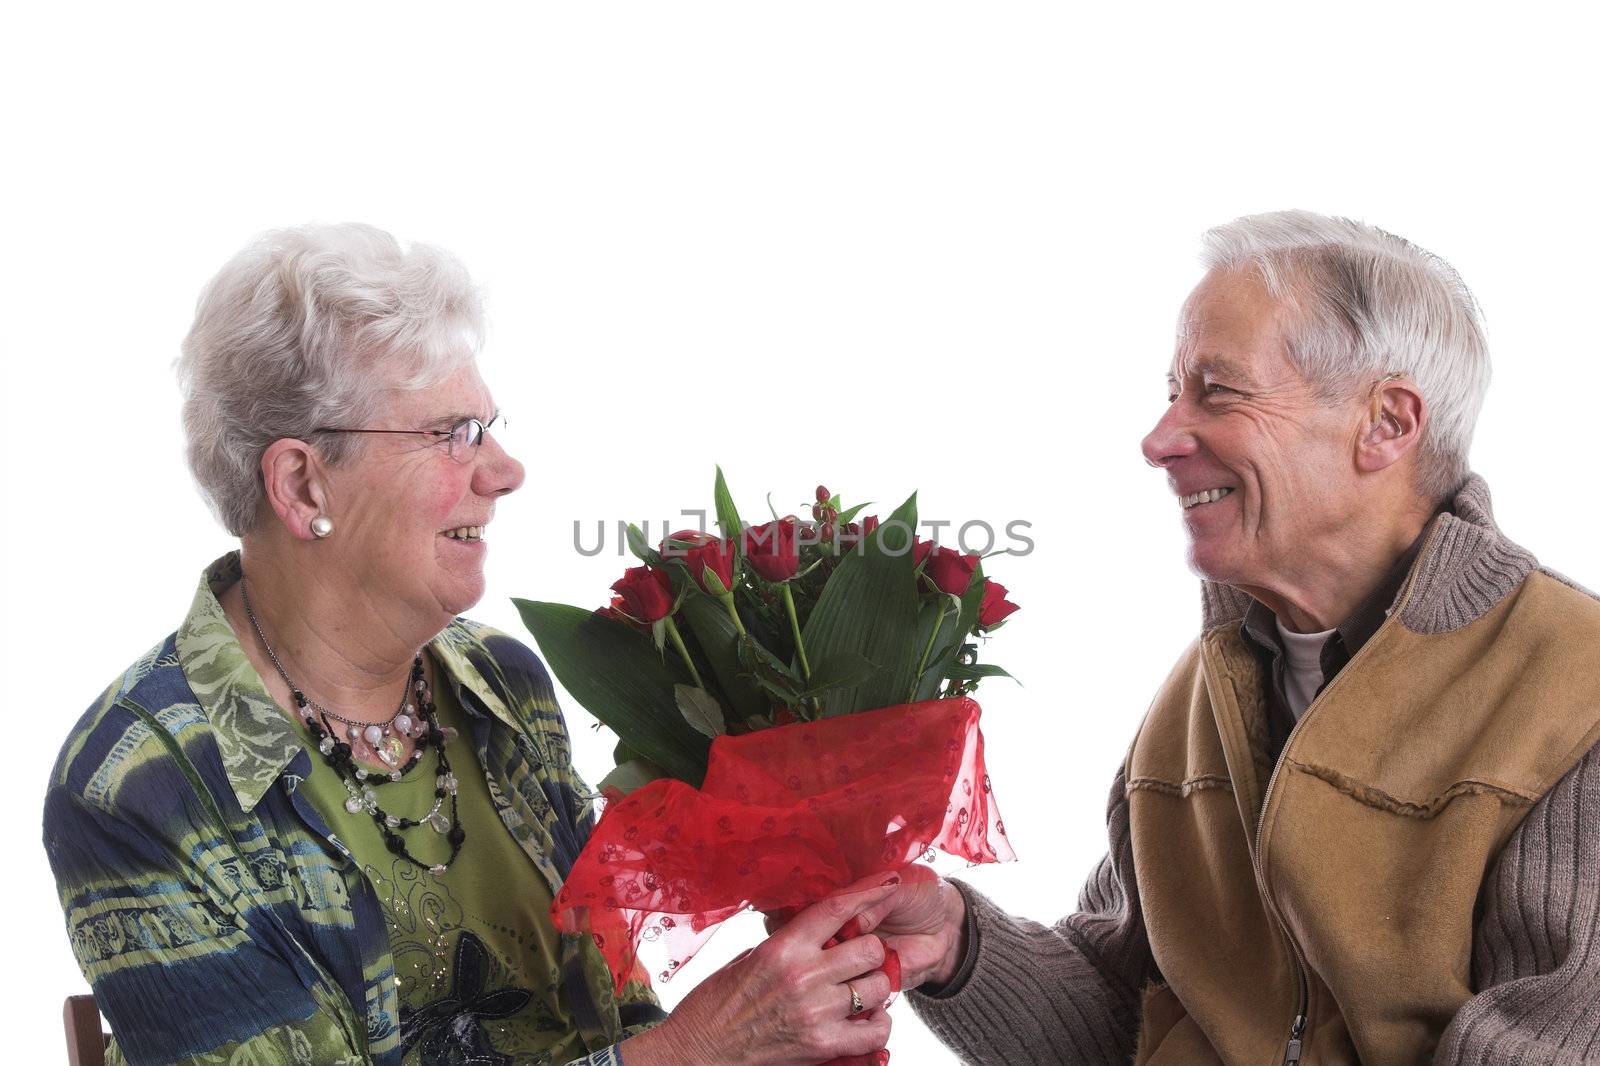 Happy senior couple celebrating valentines day together